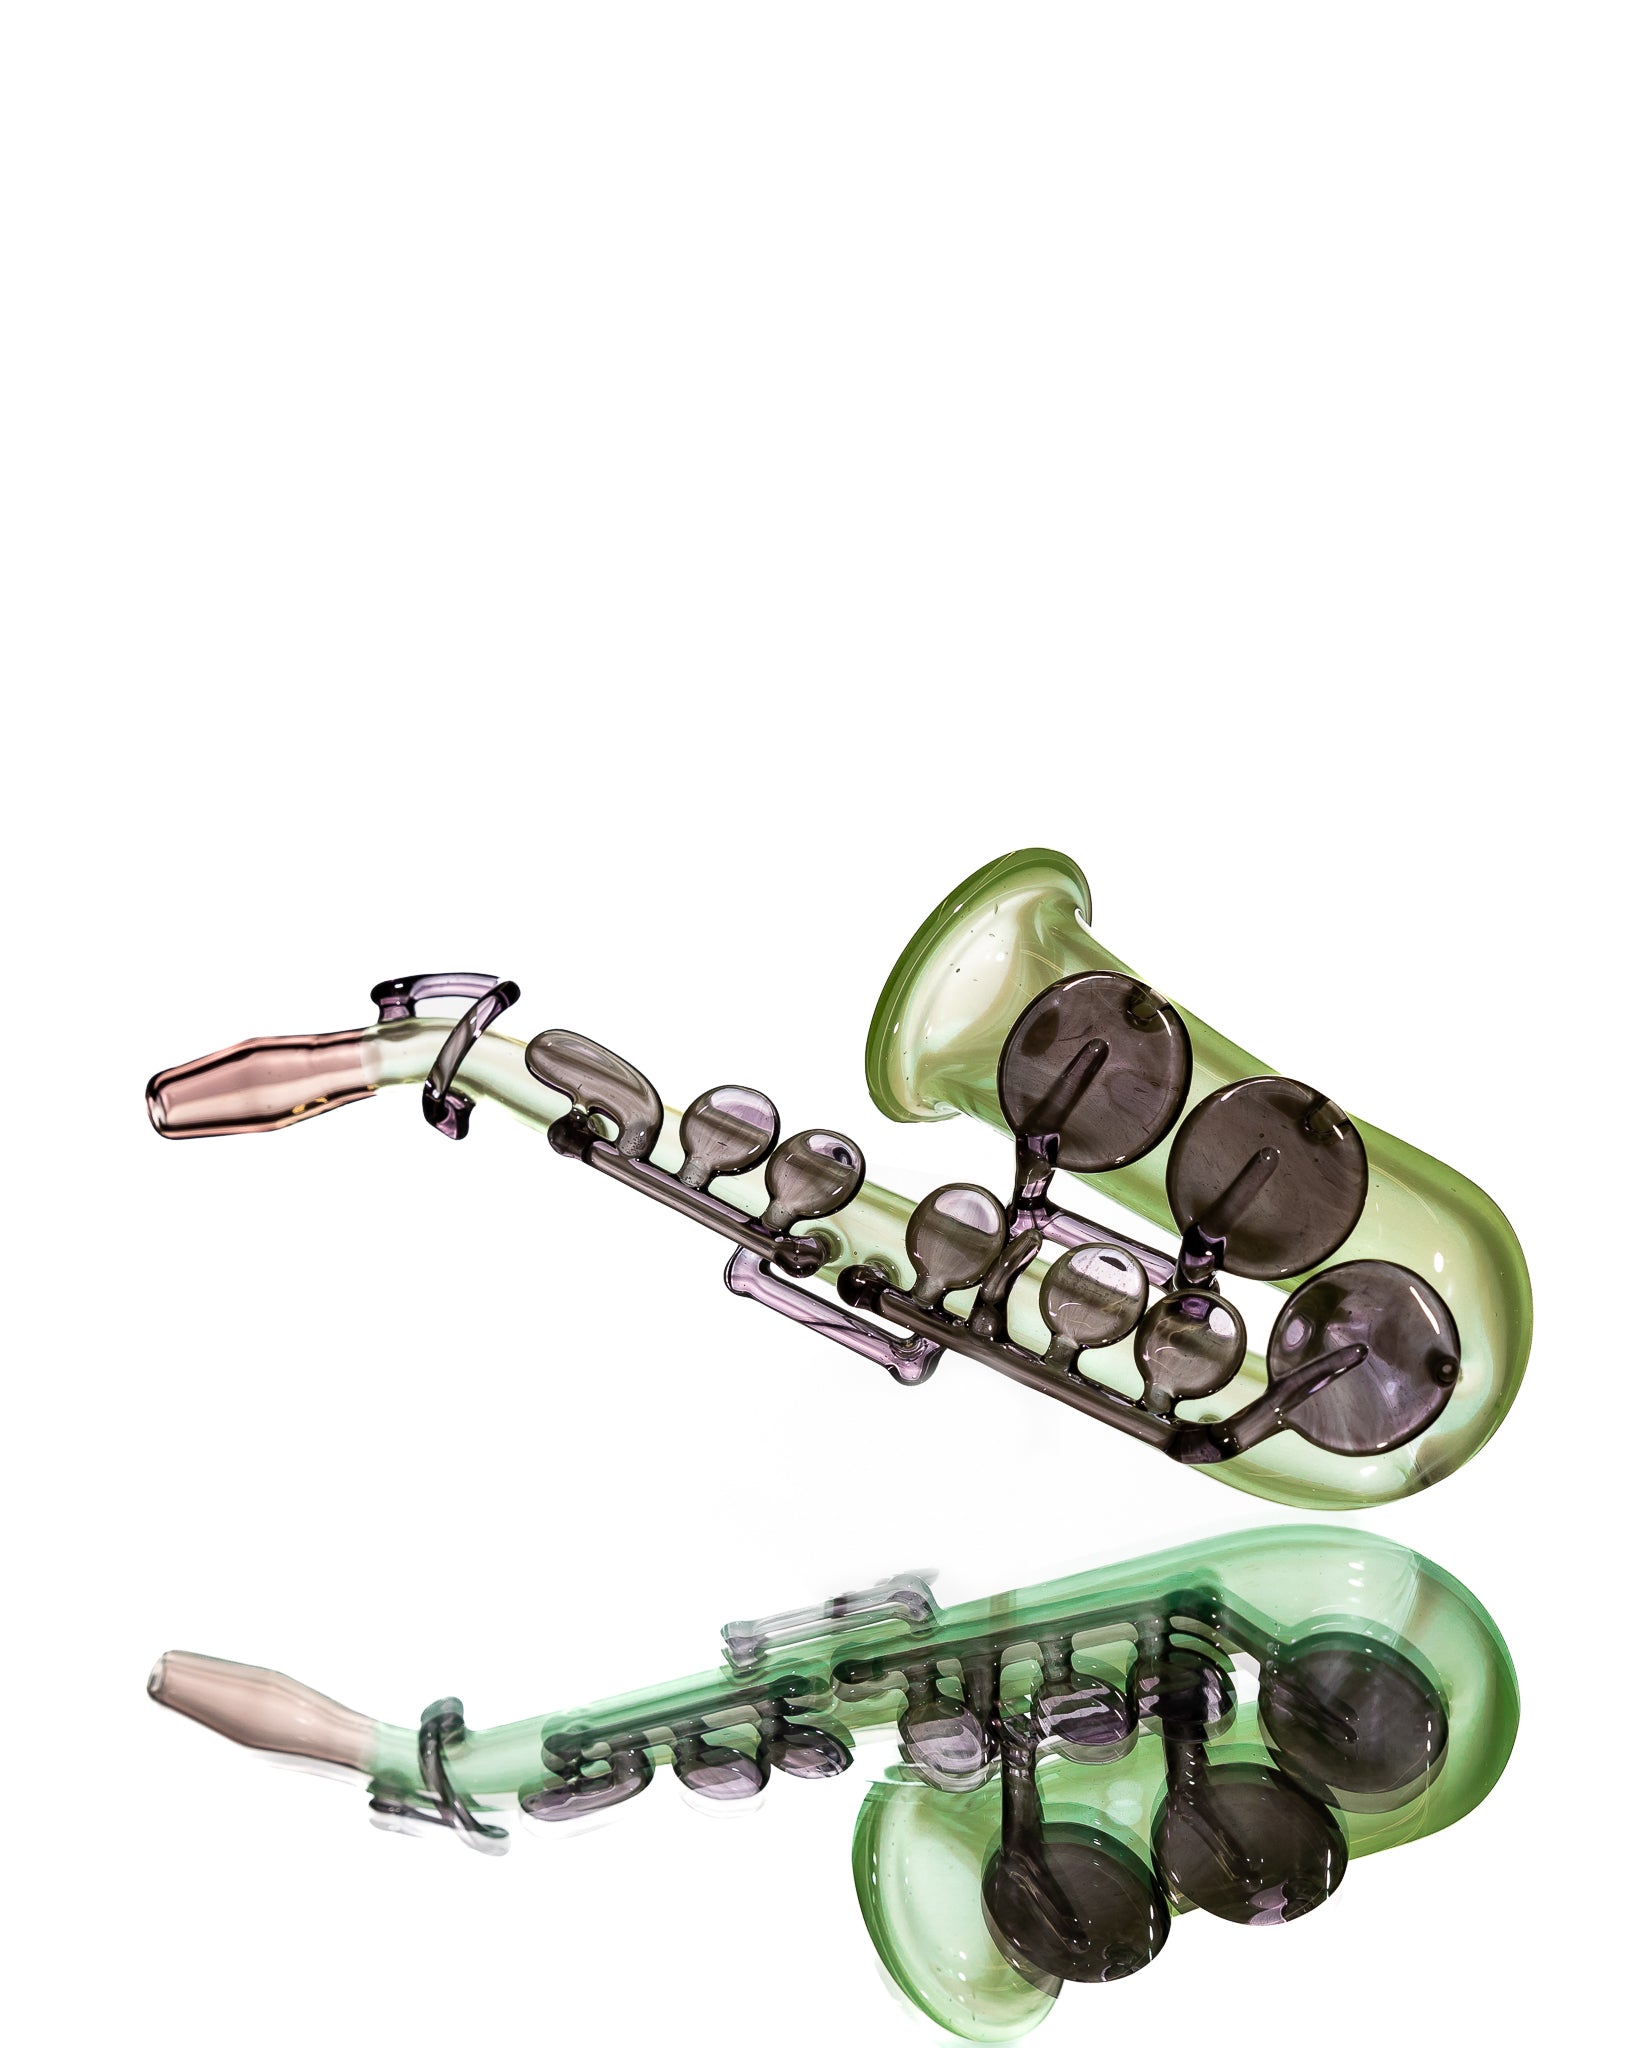 Etai Rahmil - Green Sax Lock Pipe